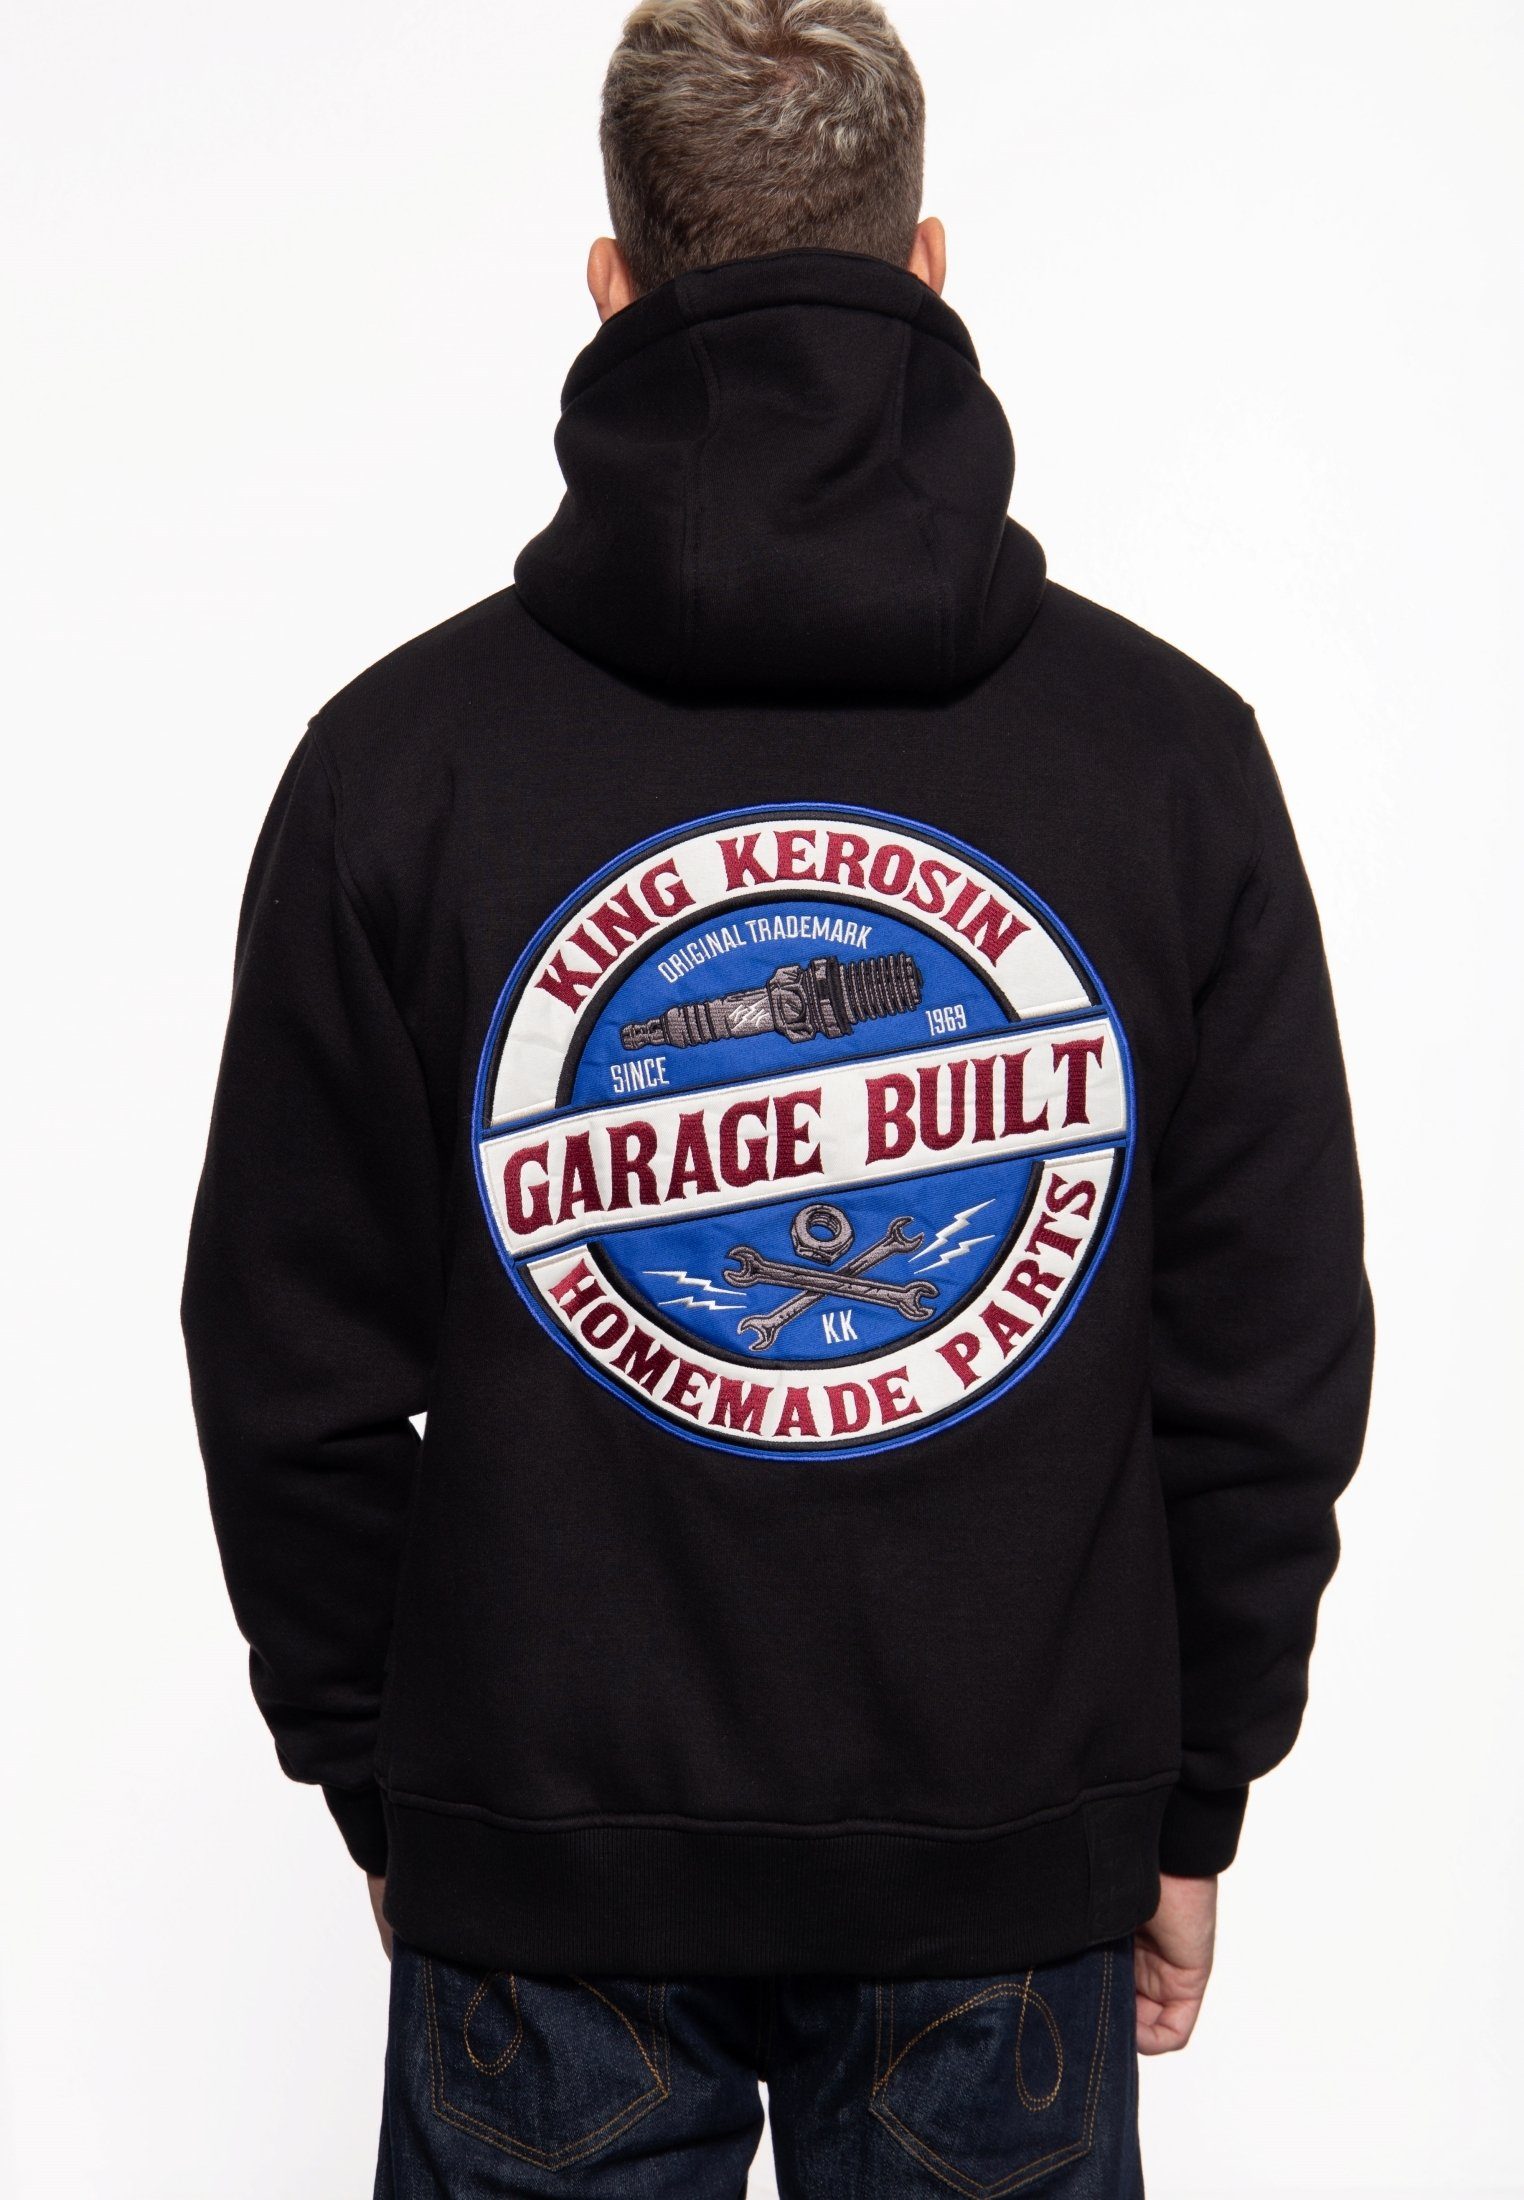 Garage Kapuzensweatjacke KingKerosin Stickereien Built mit